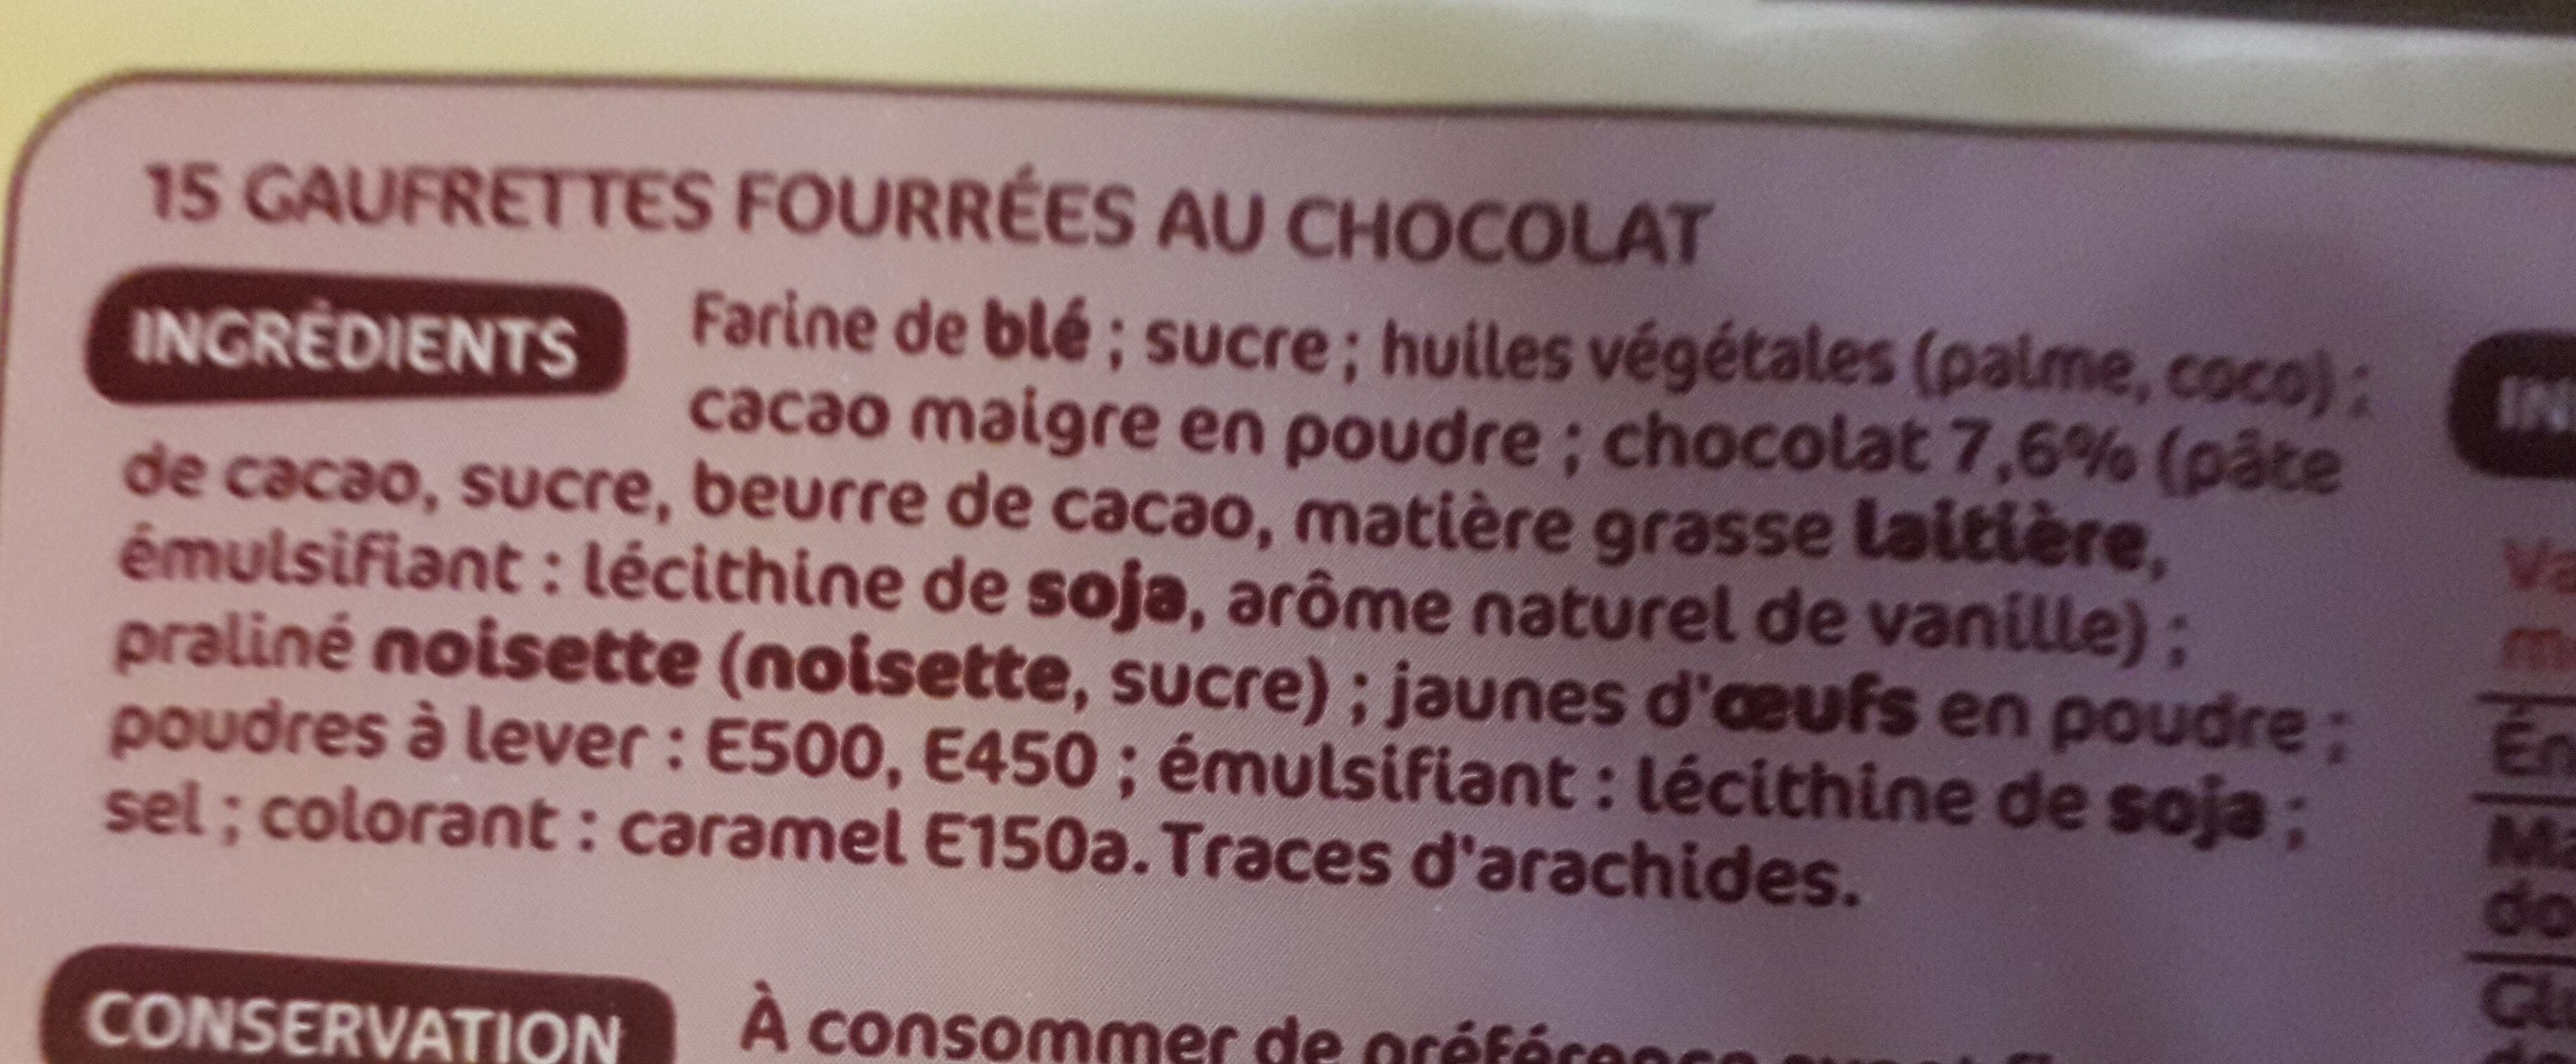 Gaufrettes chocolat x15 - Ingrédients